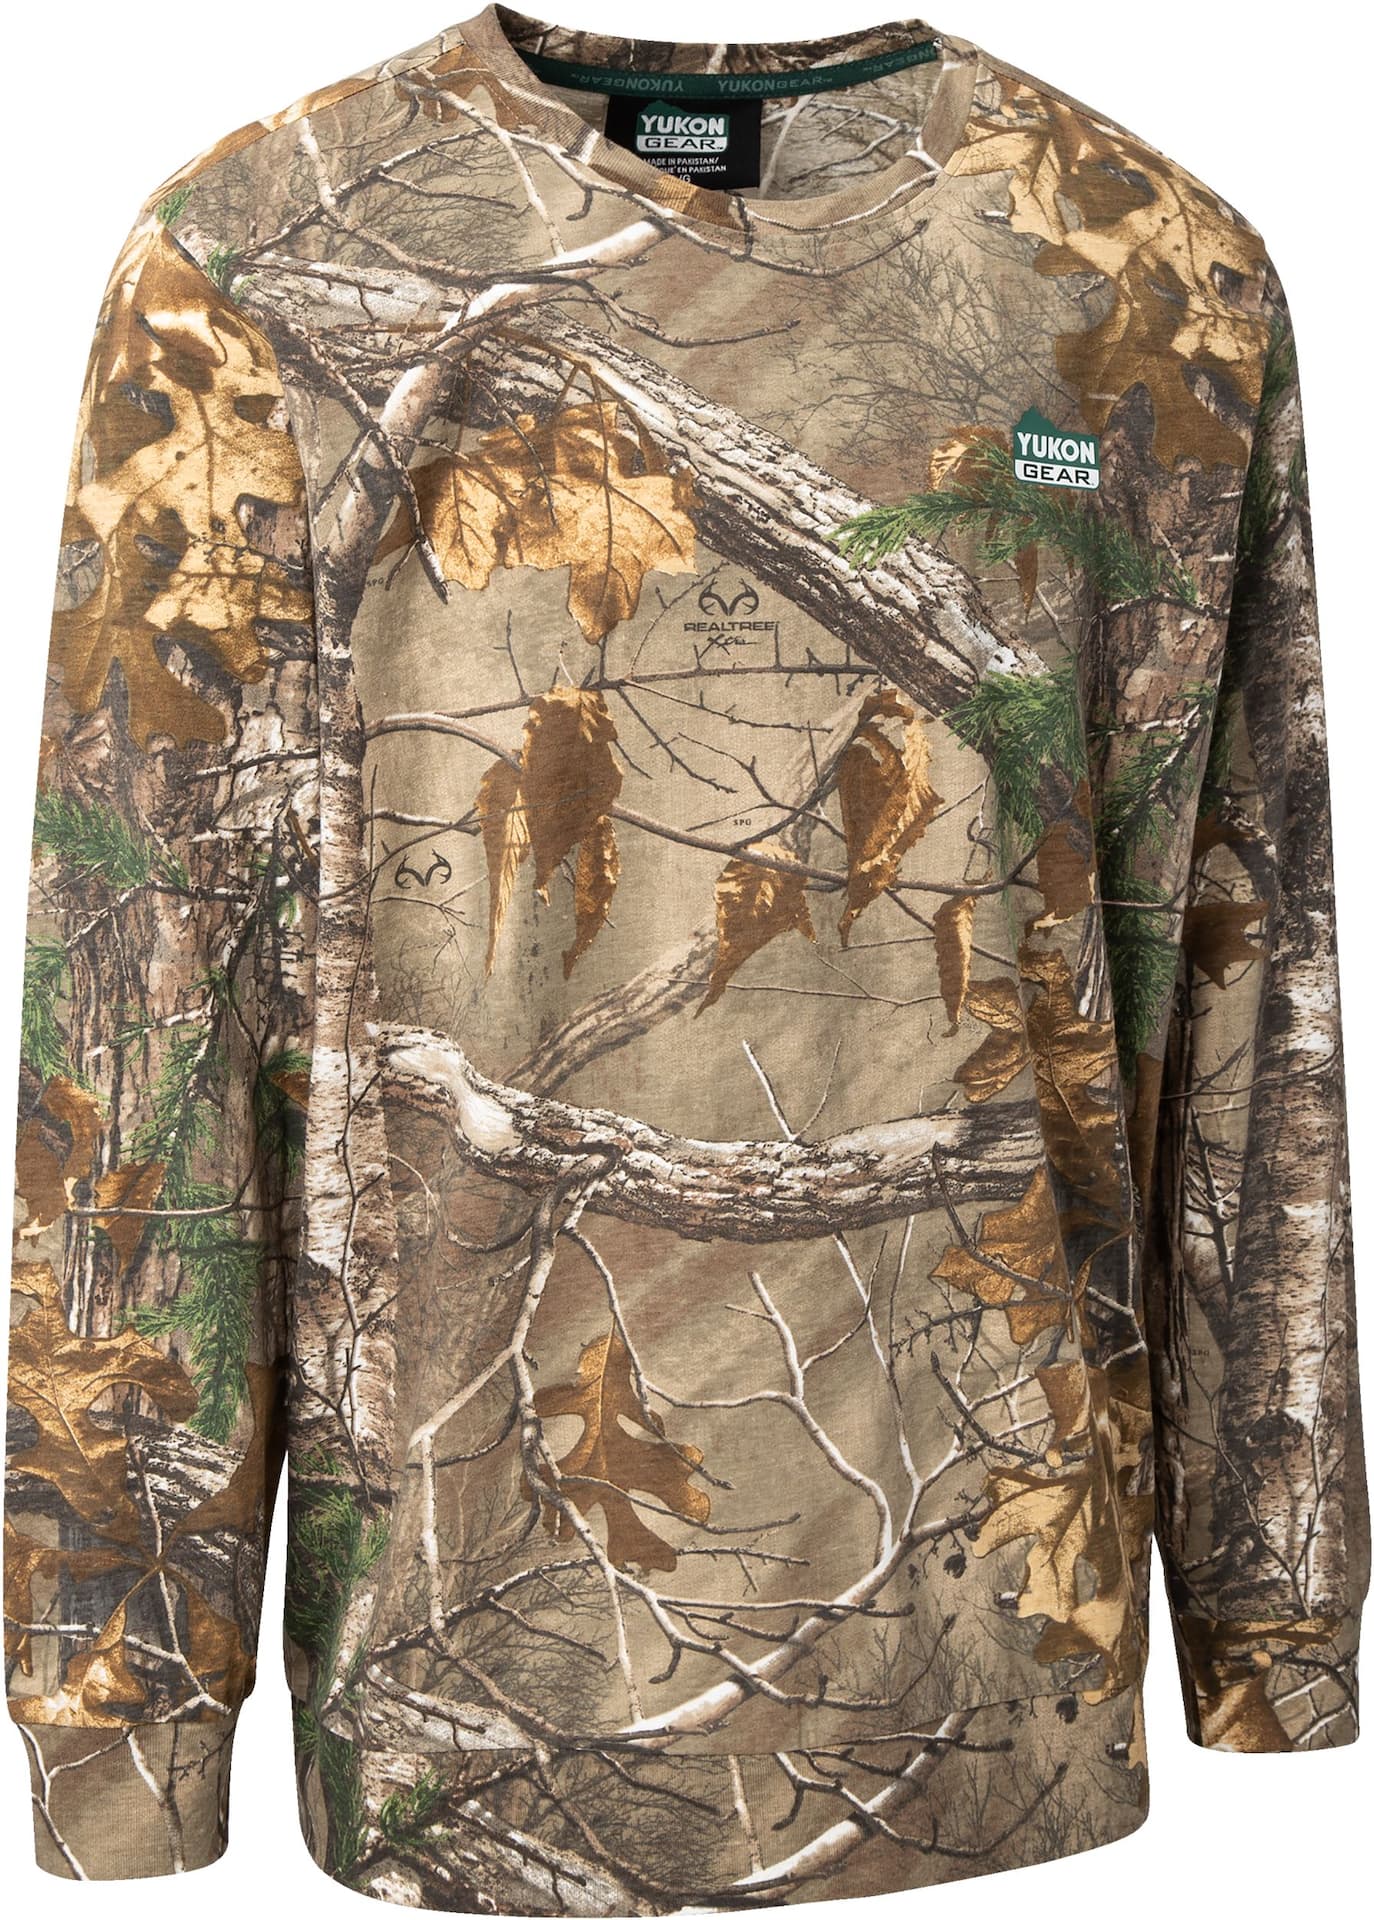 Hunting Shirts - Men's Camo Tops & T-Shirts